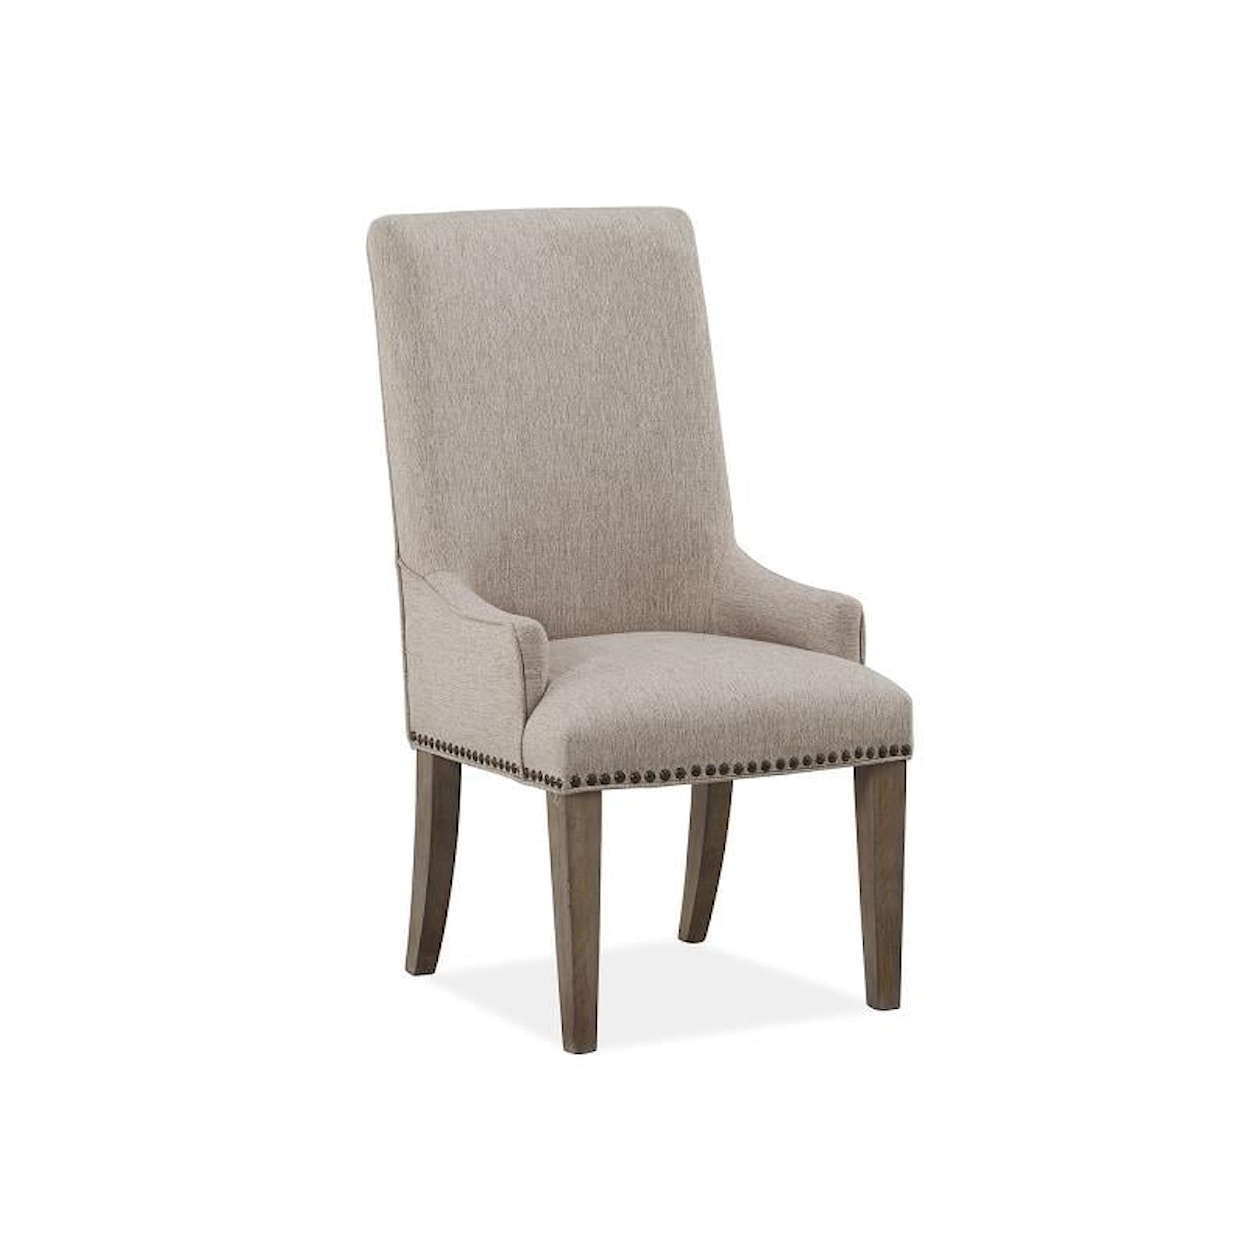 Magnussen Home Tinley Park Dining Upholstered Host Side Chair